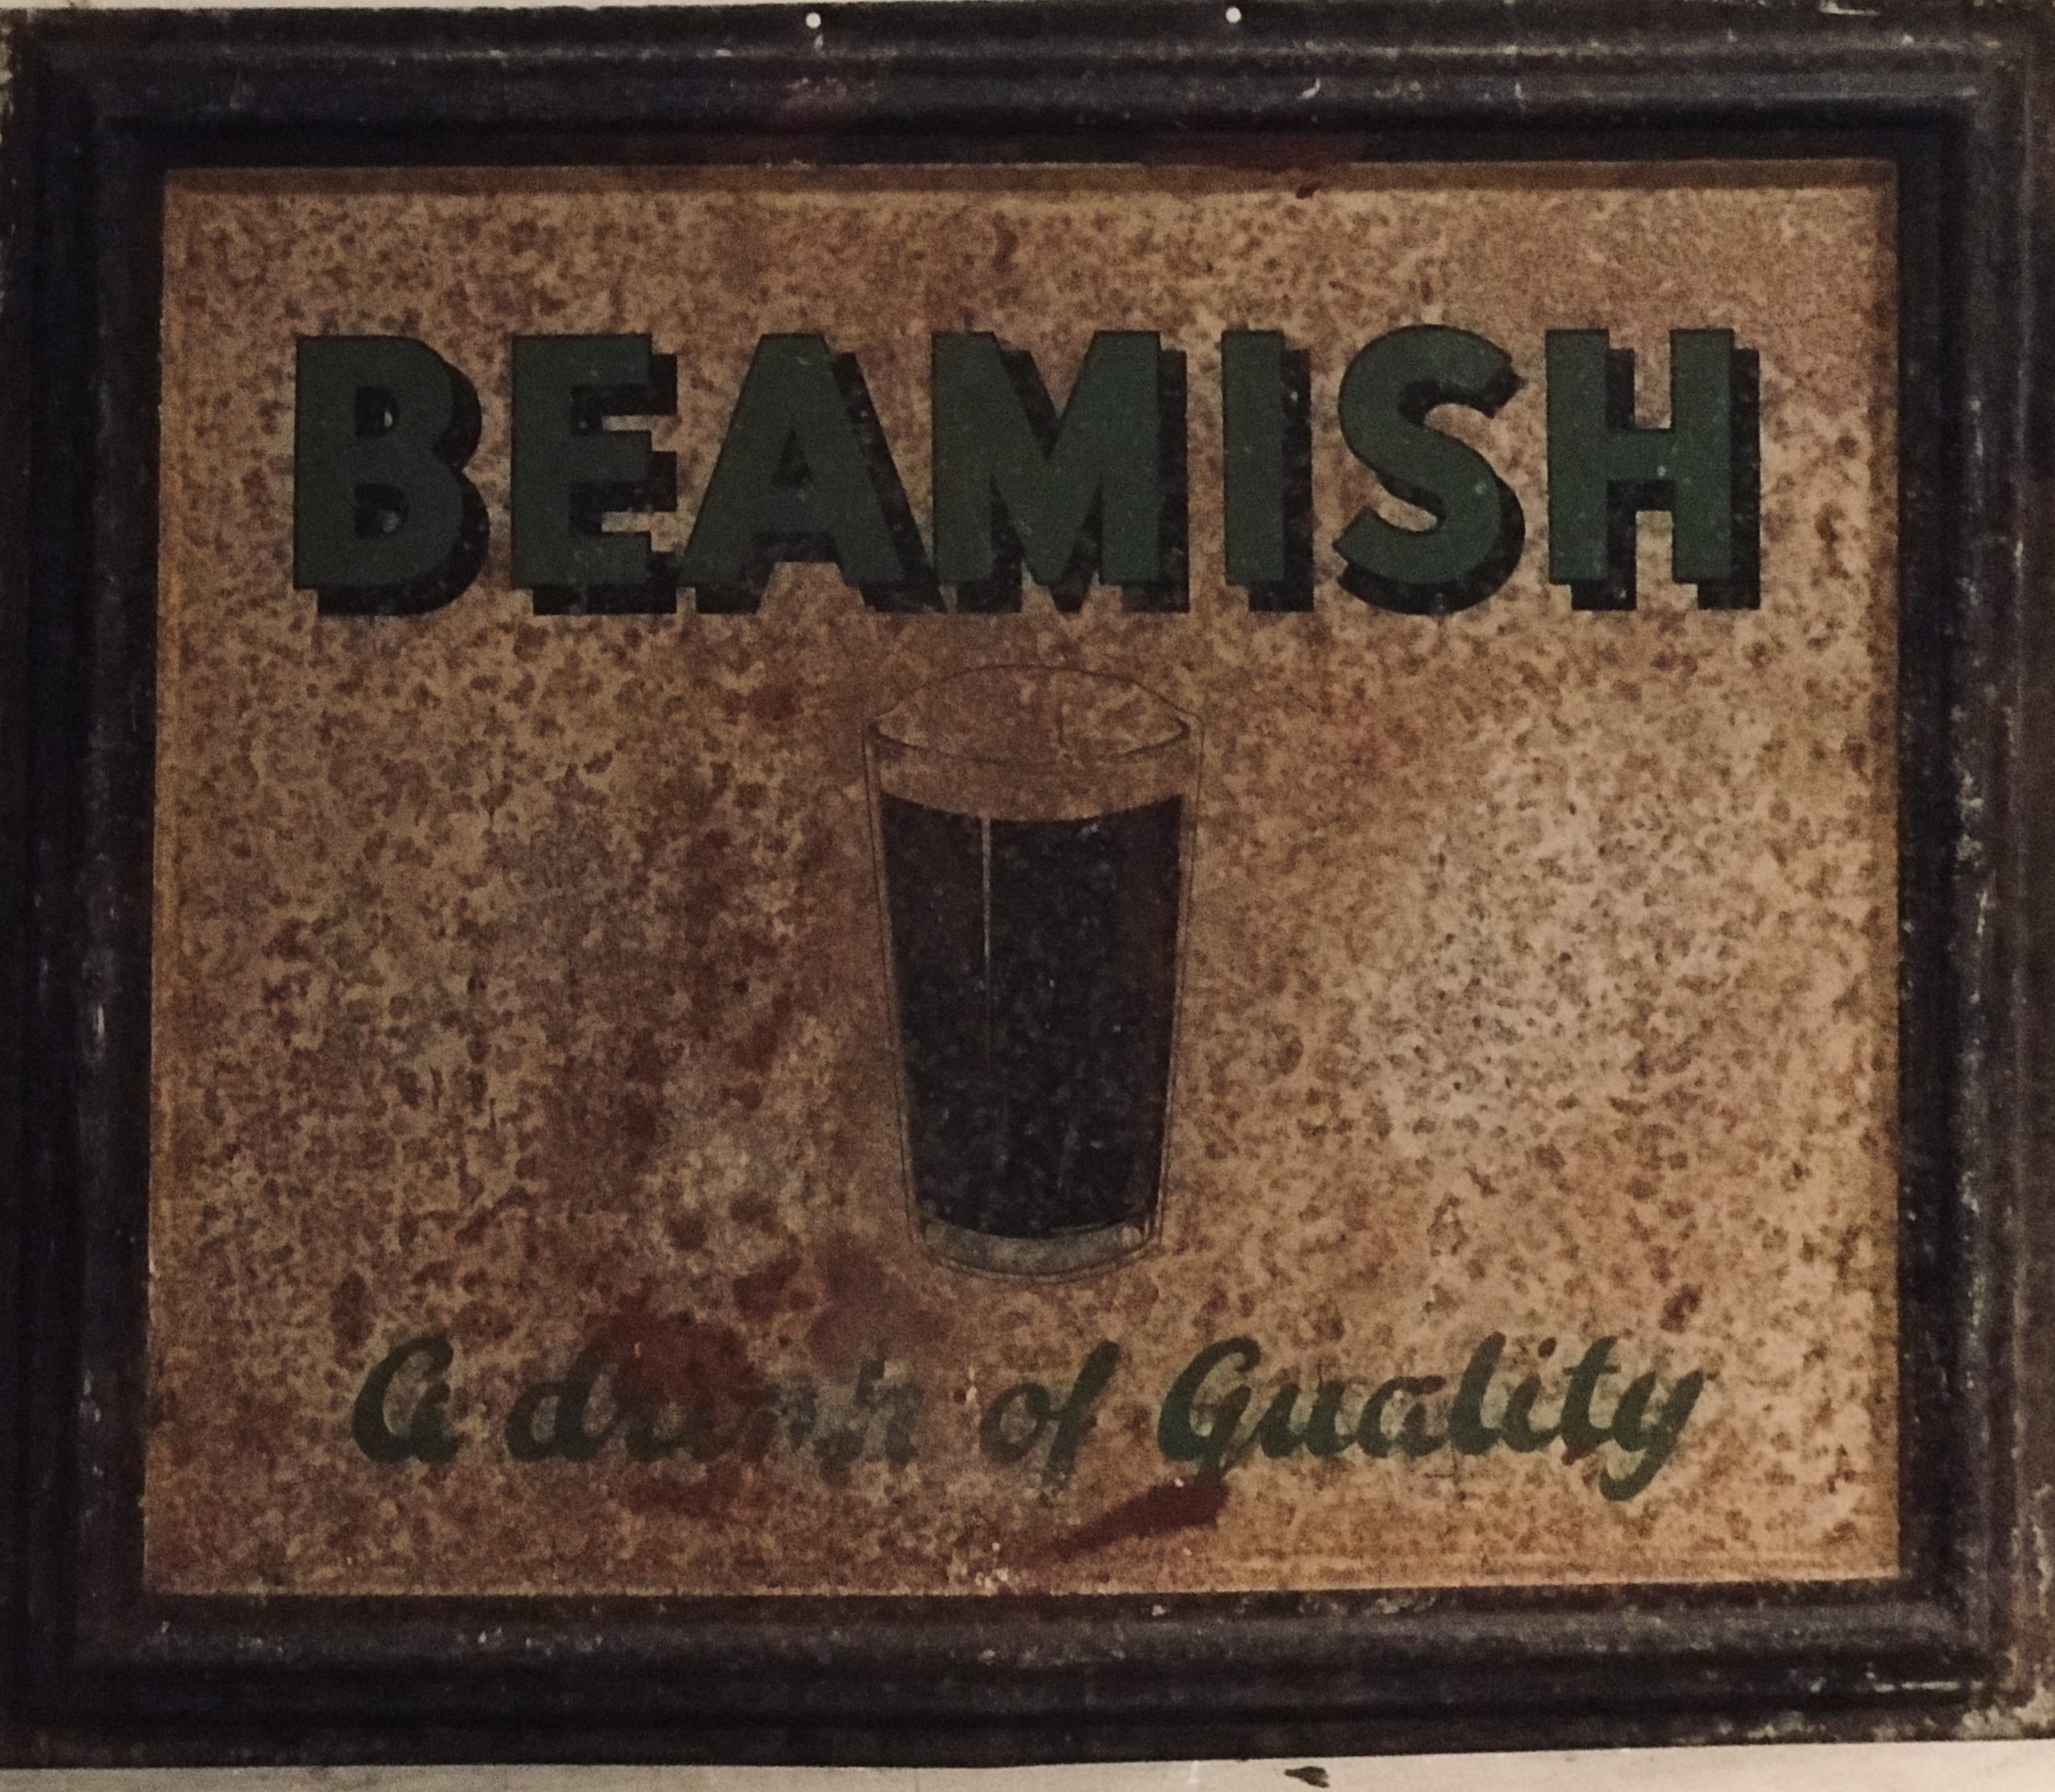 BEAMISH Irish Stout crawford ireland STICKER decal craft beer brewing brewery 